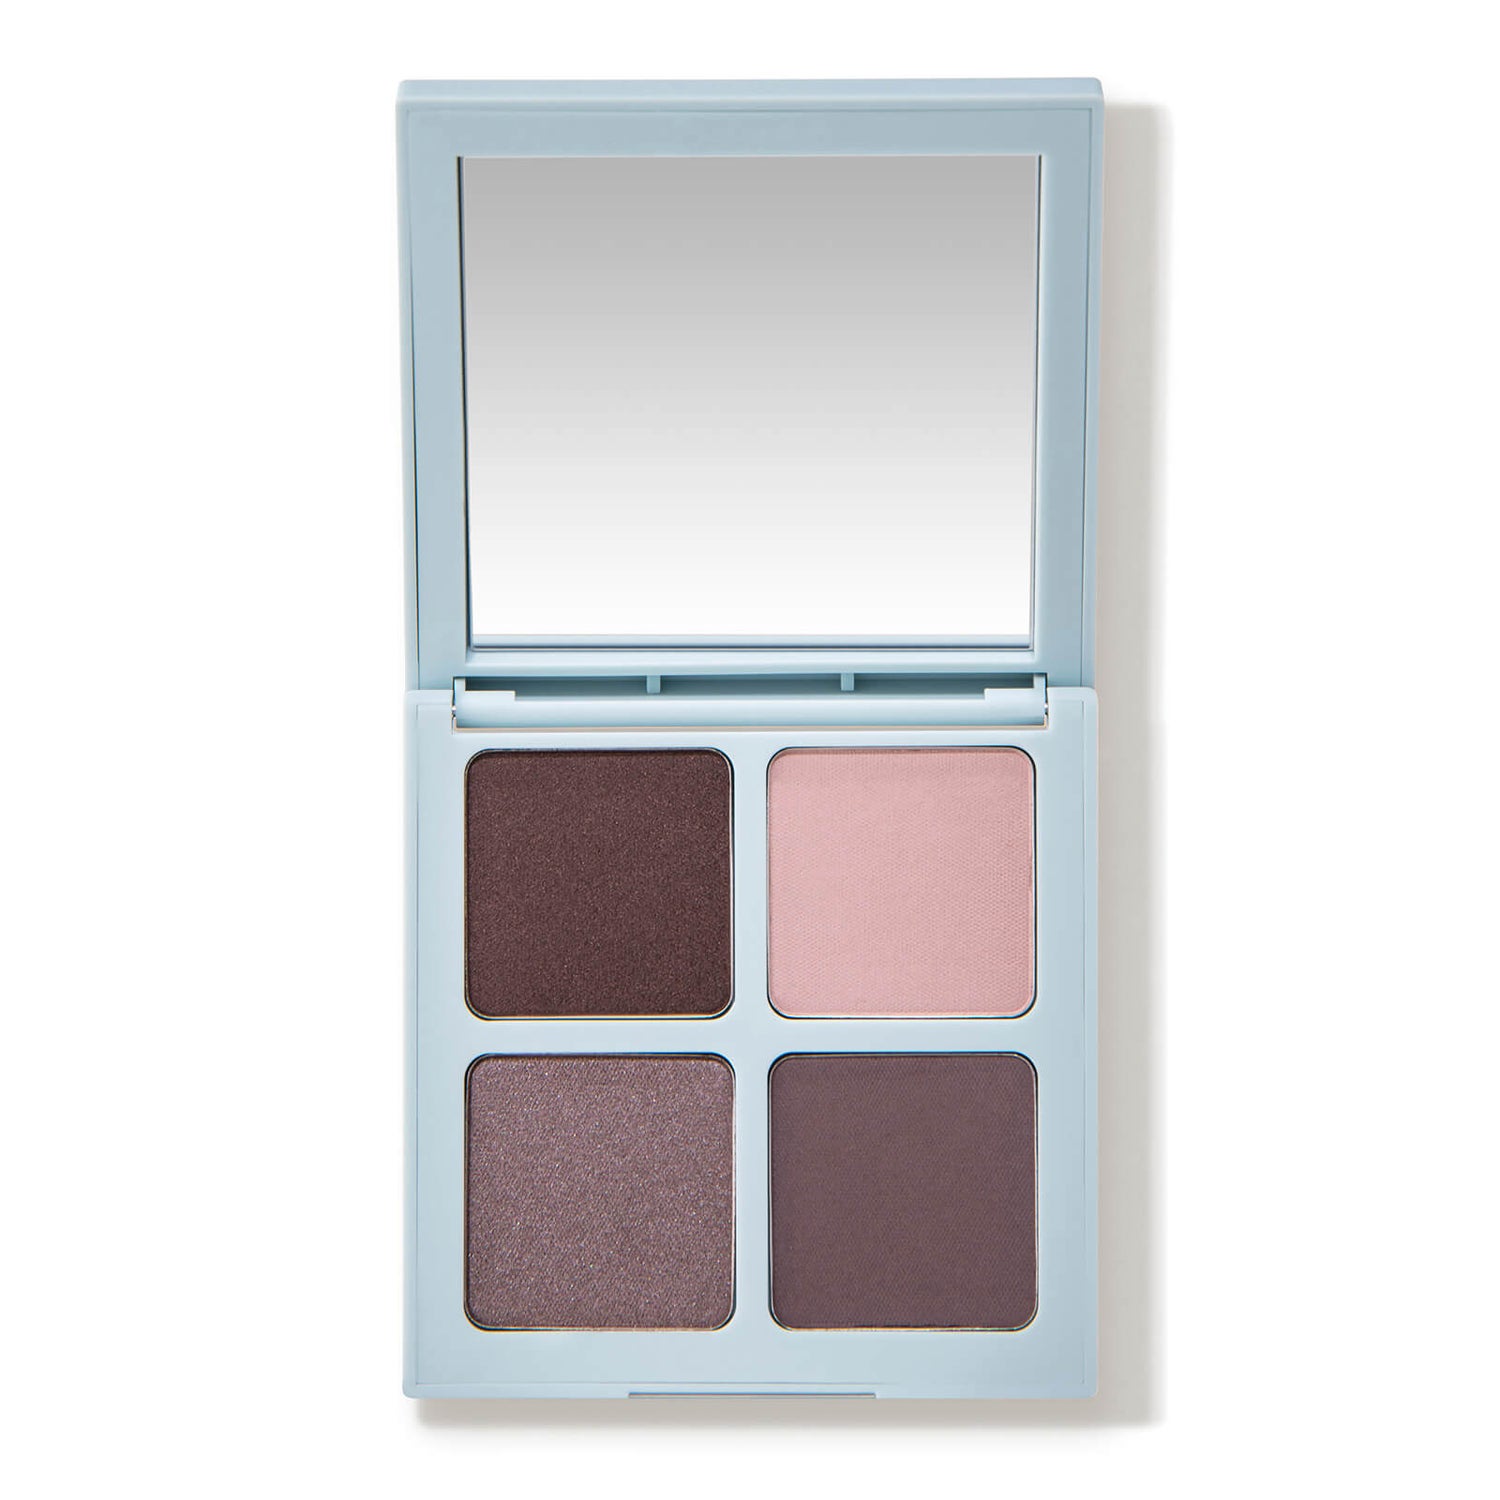 Vapour Beauty Eyeshadow Quad 0.23 oz (Various Shades)